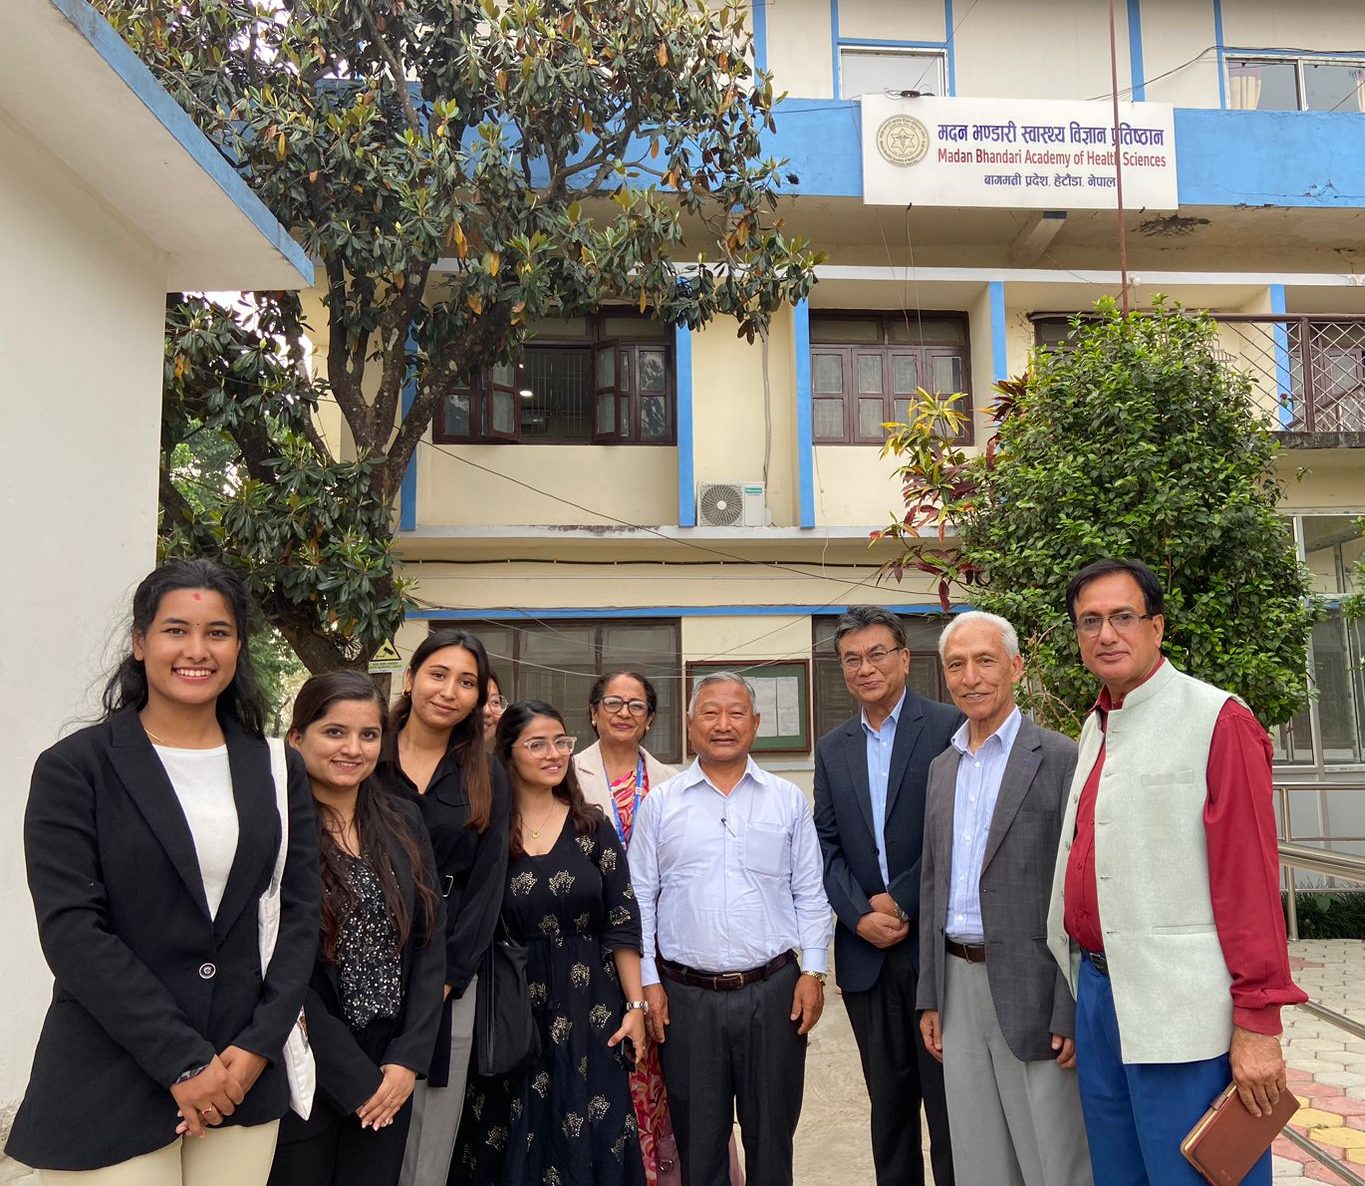 A visit to Madan Bhandari Academy of Health Sciences, Hetauda, Makwanpur district